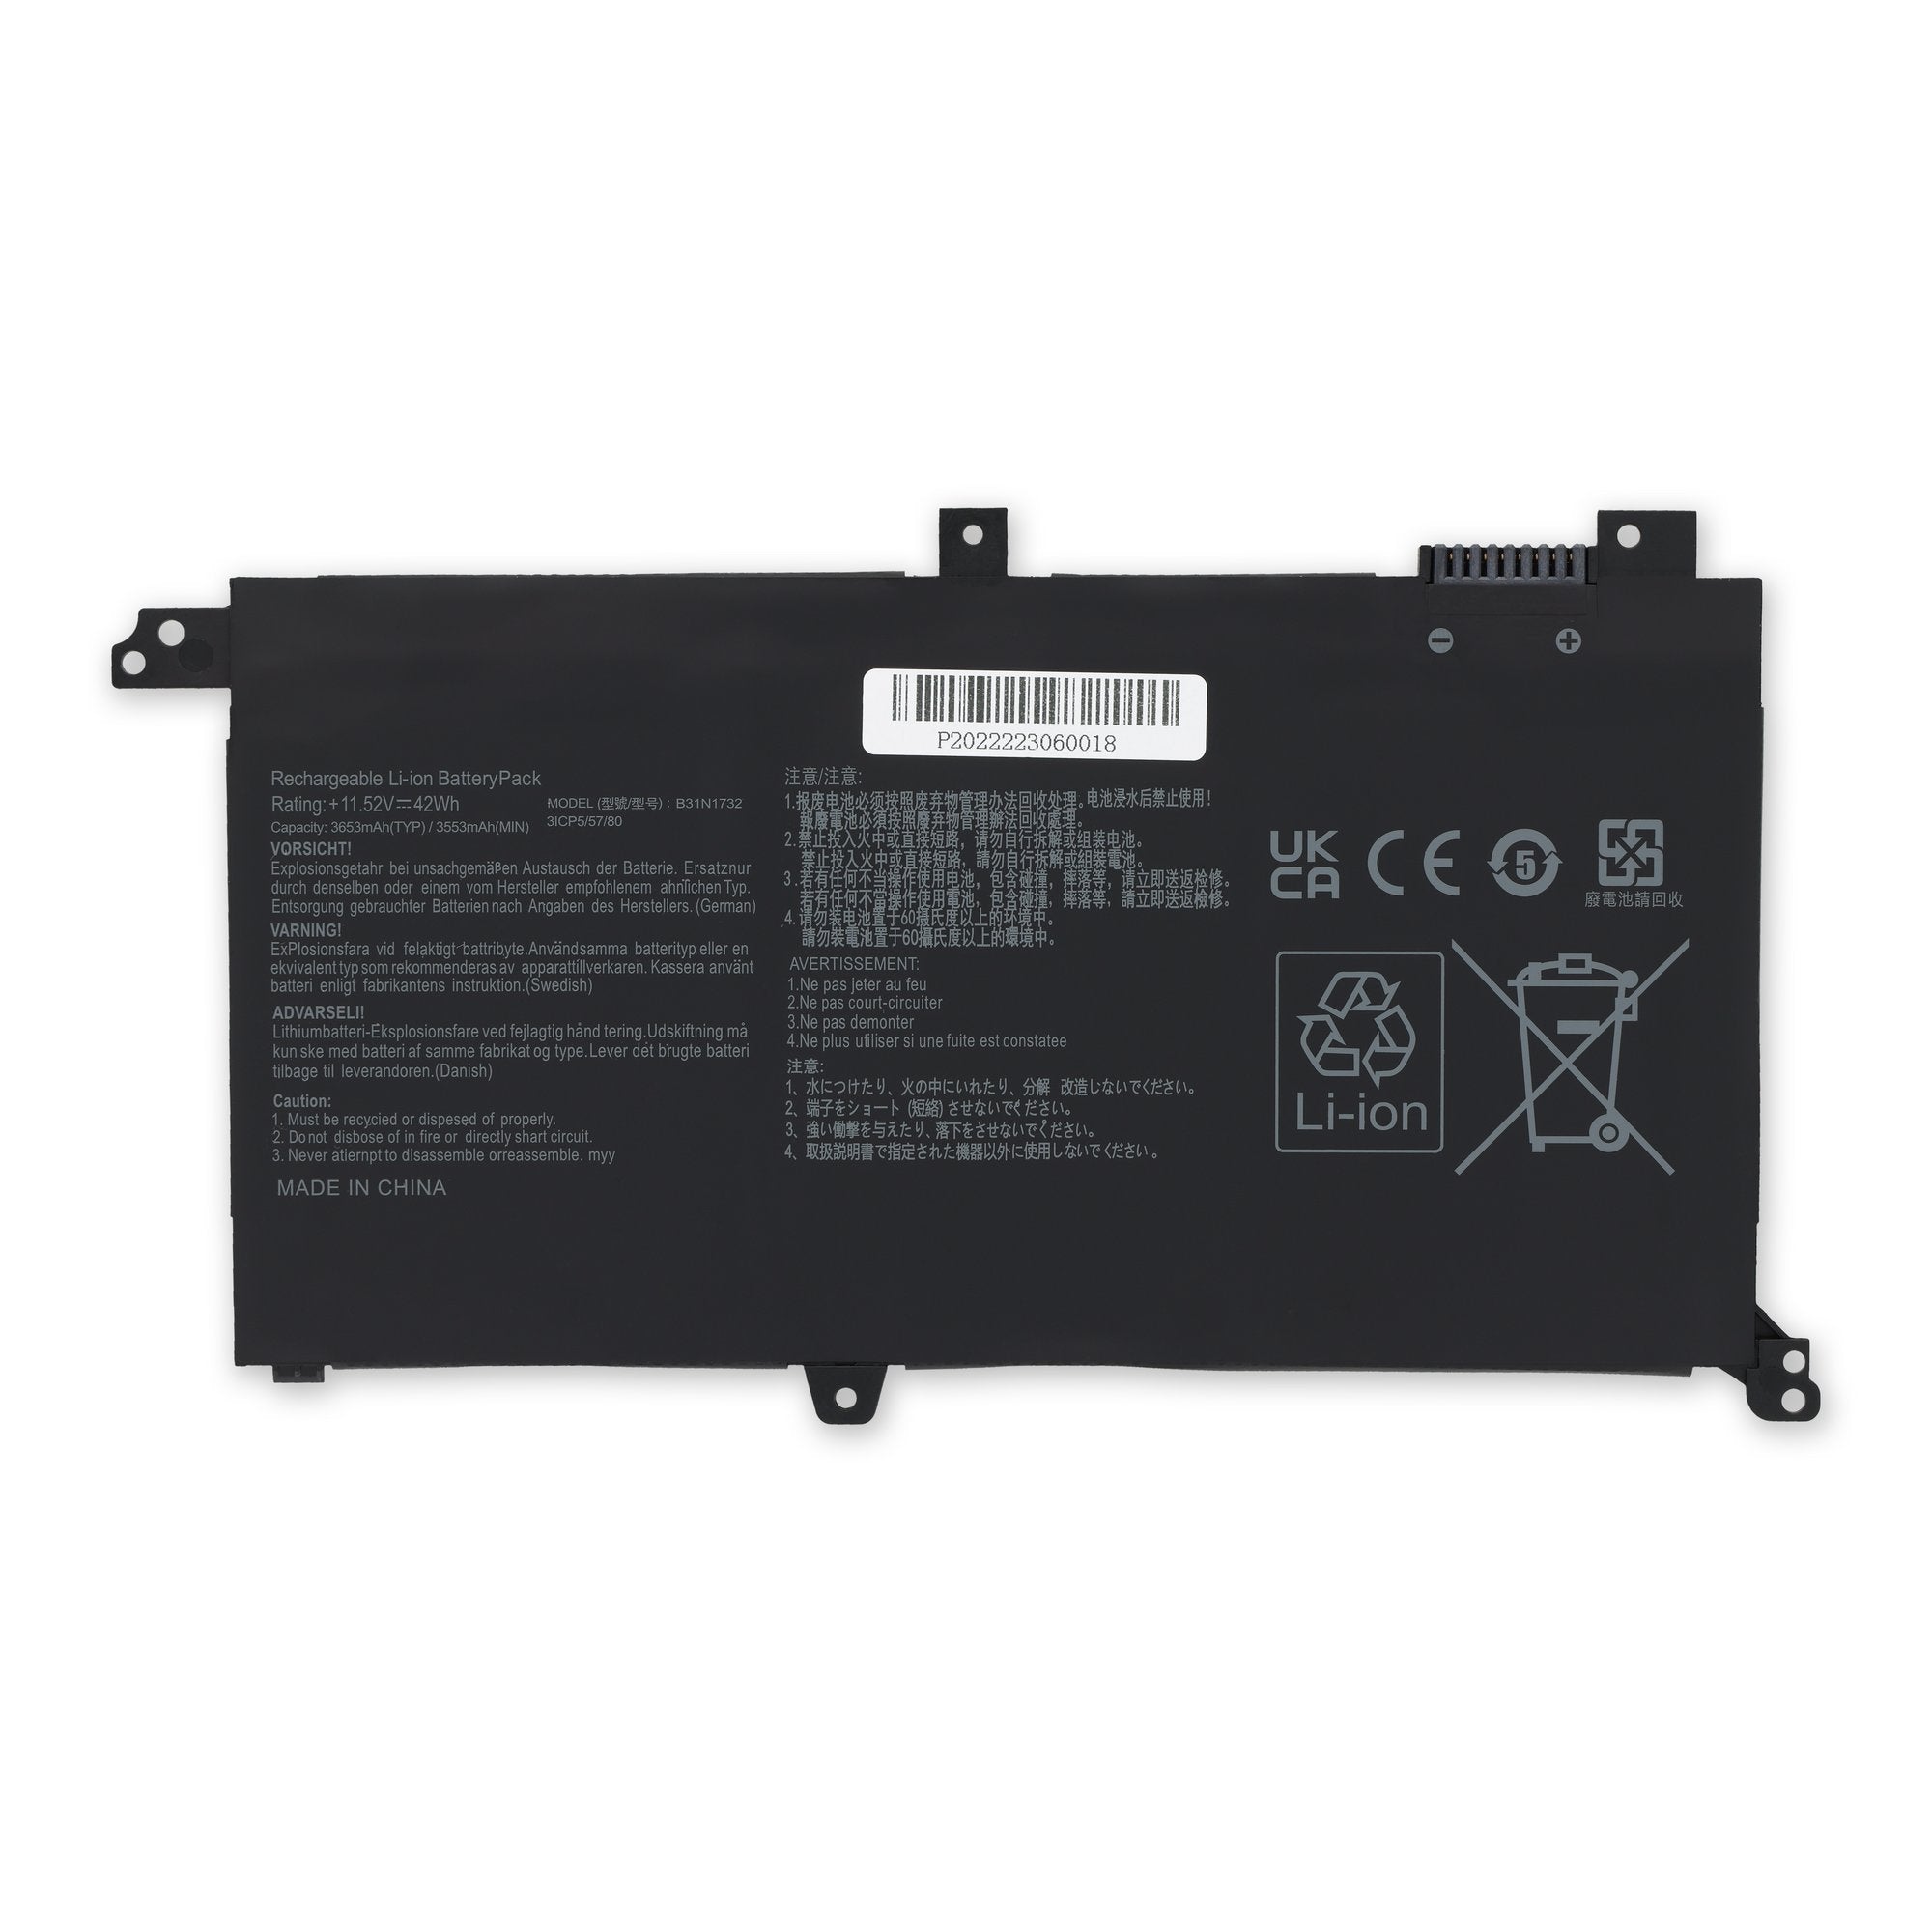 Asus VivoBook B31N1732 Battery New Part Only